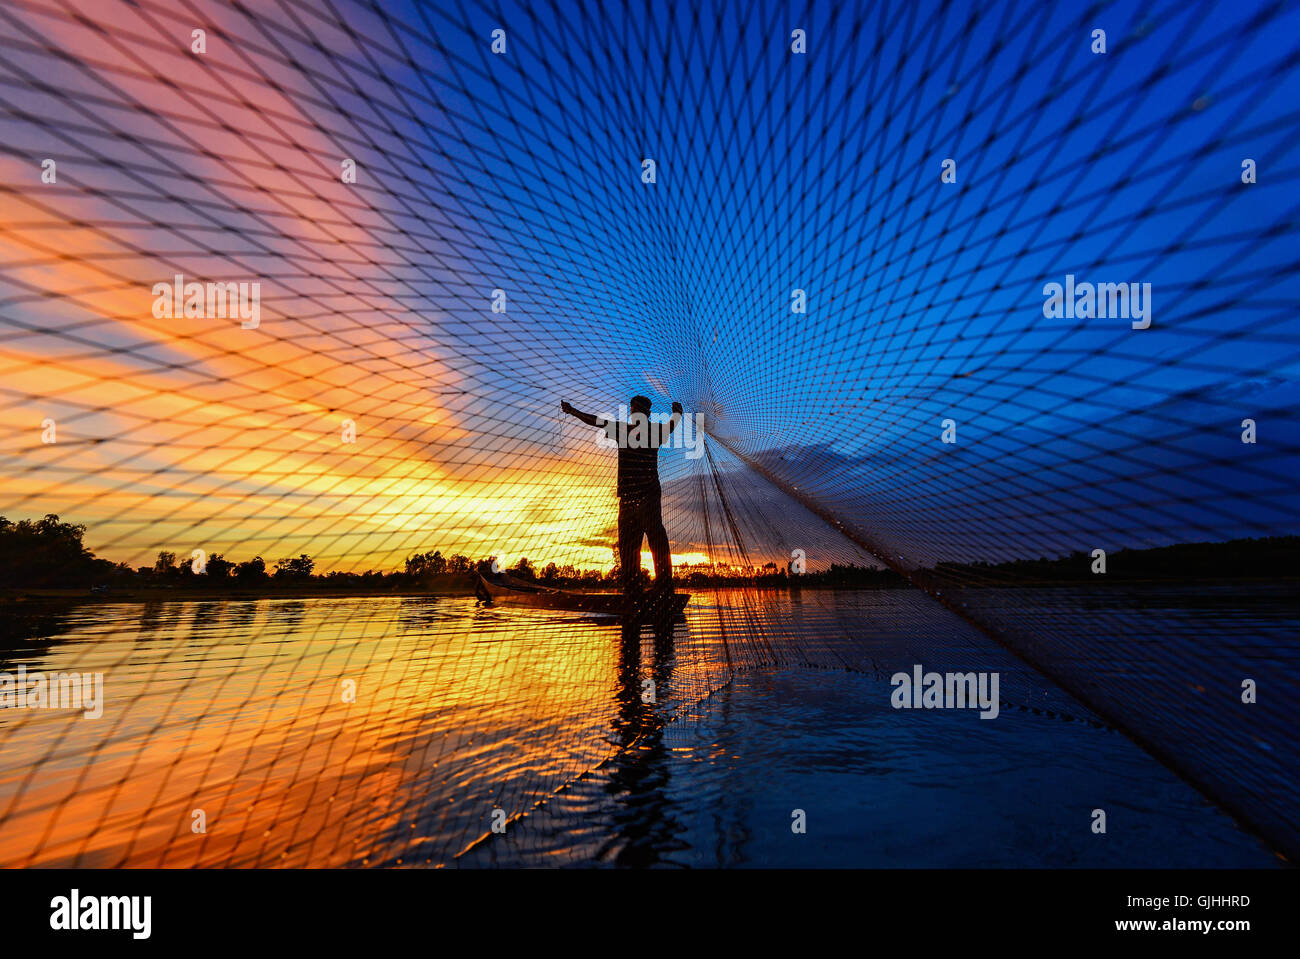 Fisherman casting fishing net at sunset, Thailand Stock Photo